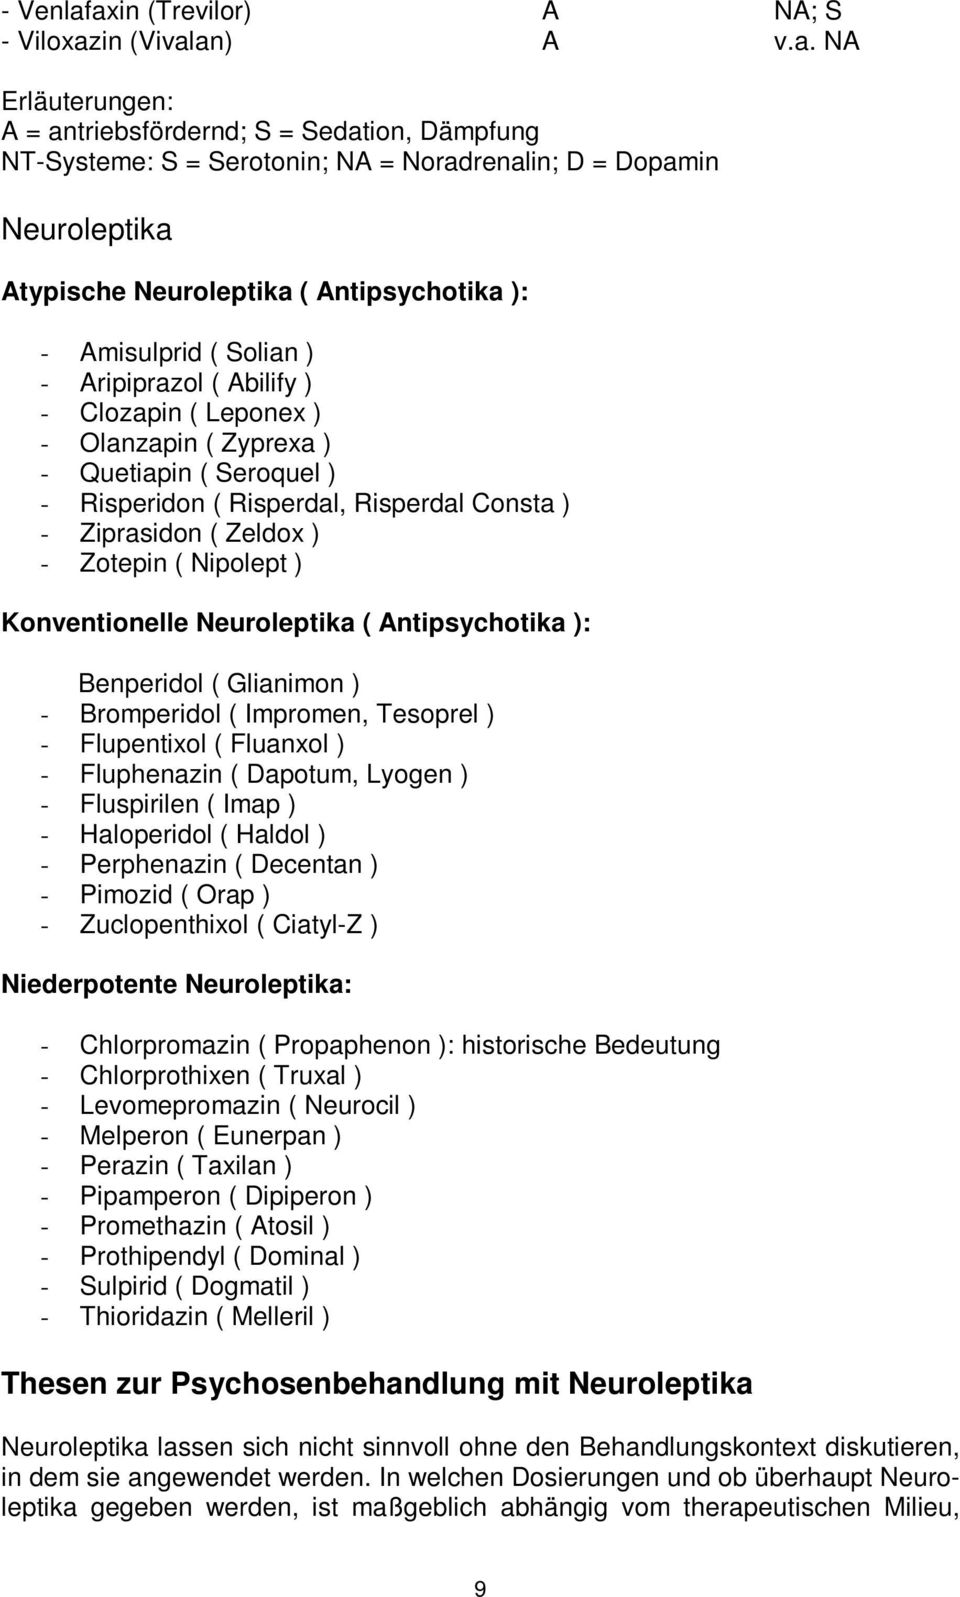 Neuroleptika ( Antipsychotika ): - Amisulprid ( Solian ) - Aripiprazol ( Abilify ) - Clozapin ( Leponex ) - Olanzapin ( Zyprexa ) - Quetiapin ( Seroquel ) - Risperidon ( Risperdal, Risperdal Consta )